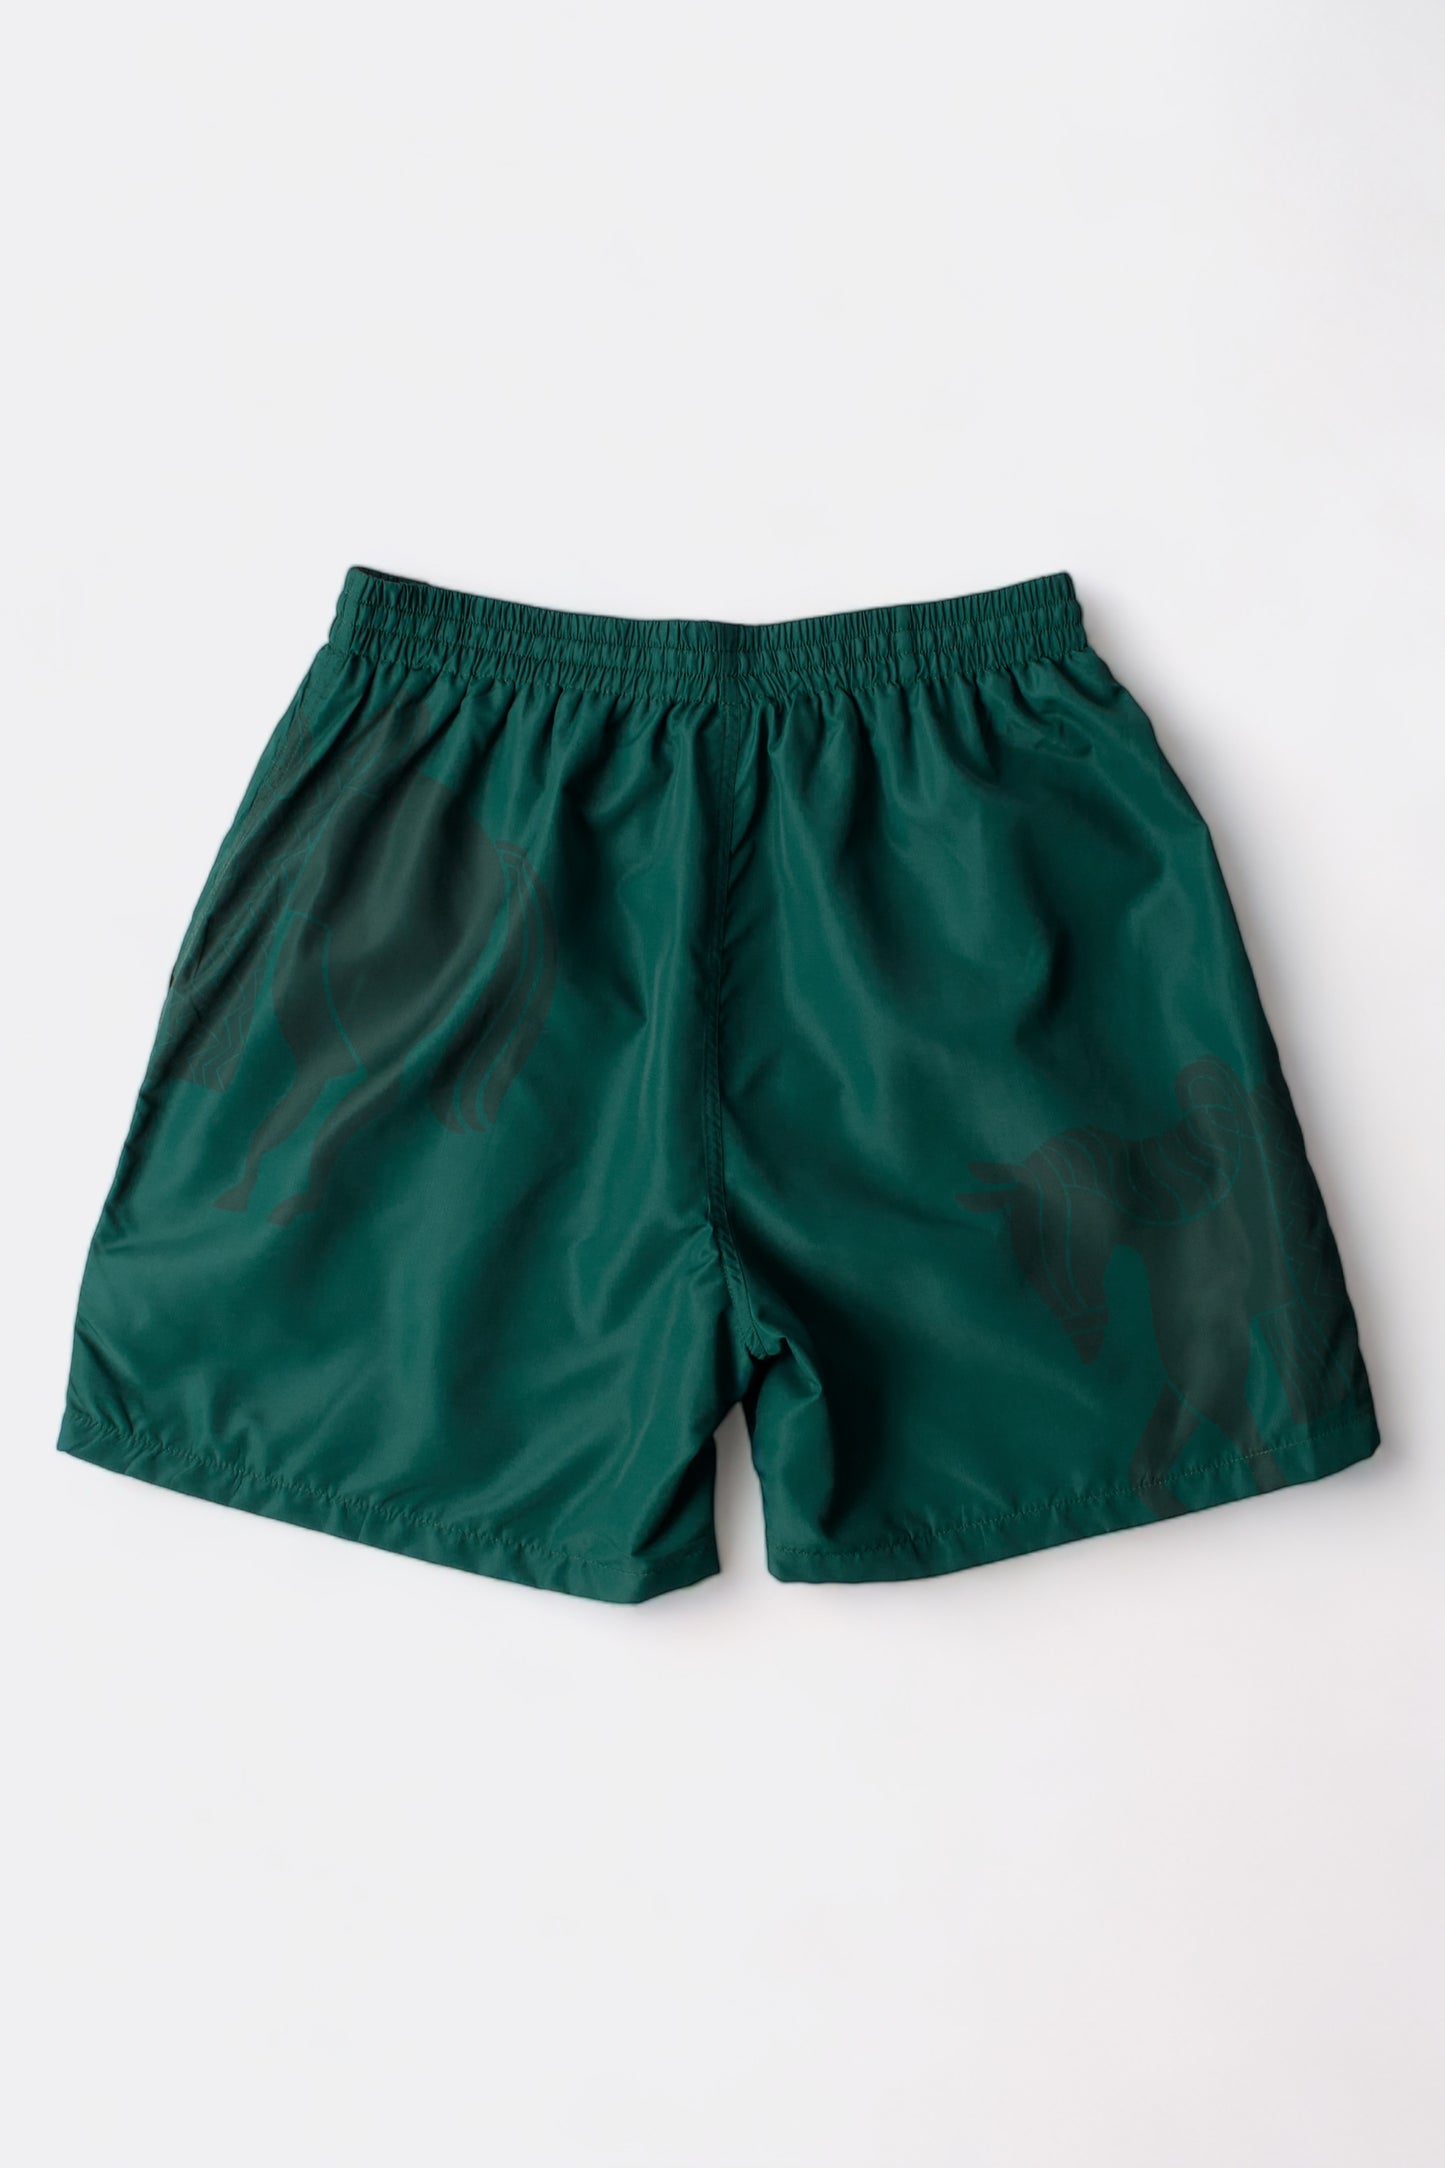 Parra - Short Horse Shorts (Pine Green)